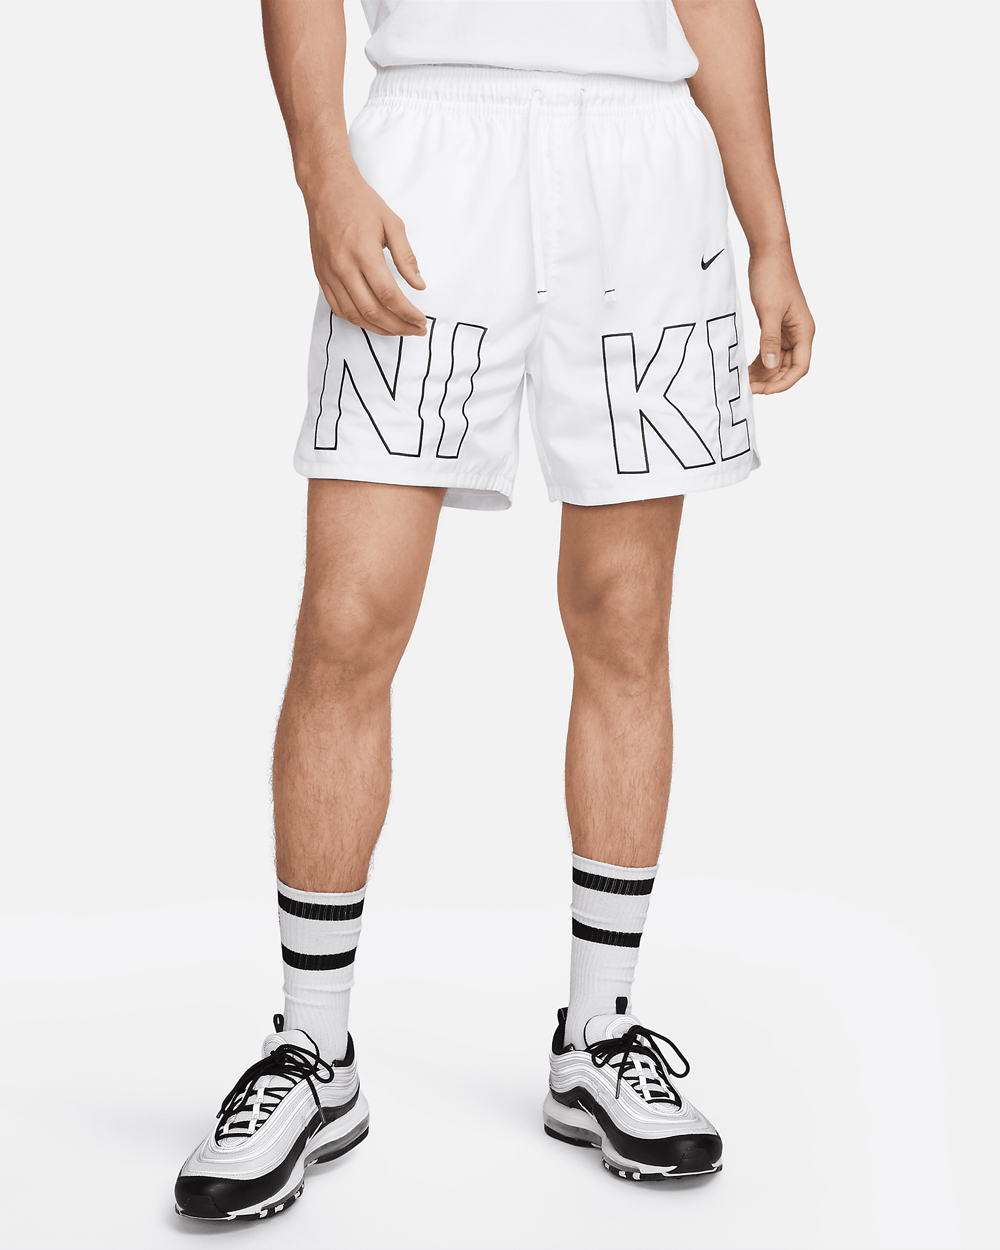 Nike-Sportswear-Woven-Flow-Shorts-White-Black